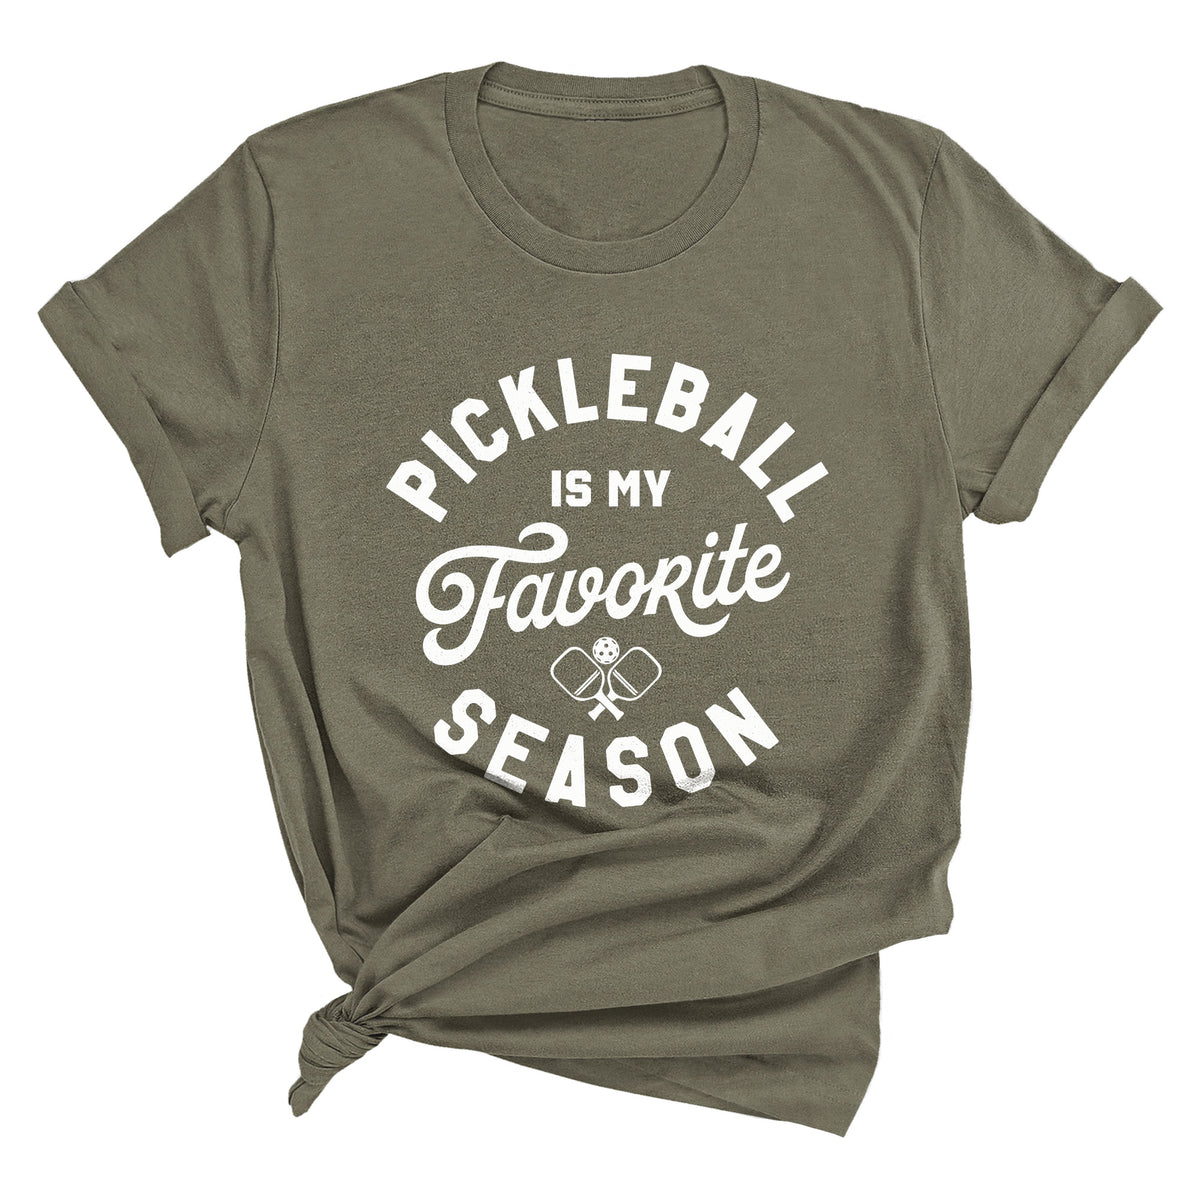 Pickleball is My Favorite Season Unisex T-Shirt